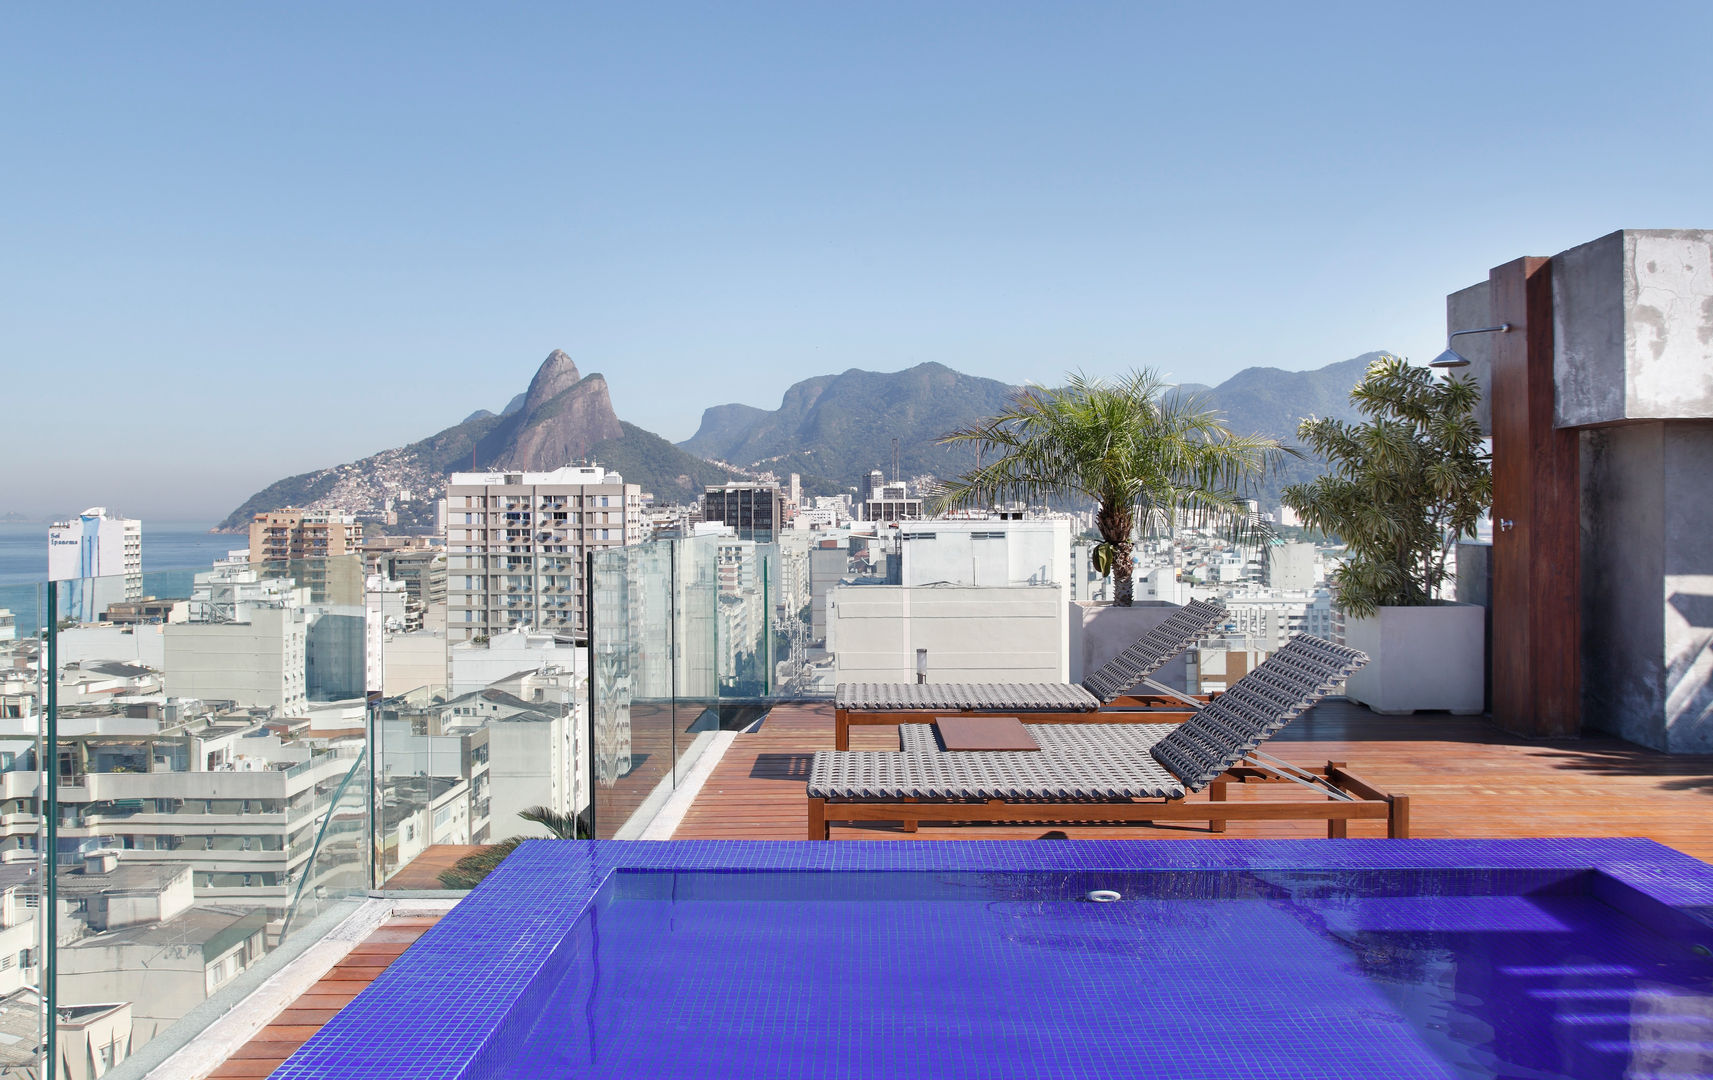 Cobertura Ipanema, House in Rio House in Rio Balcones y terrazas modernos